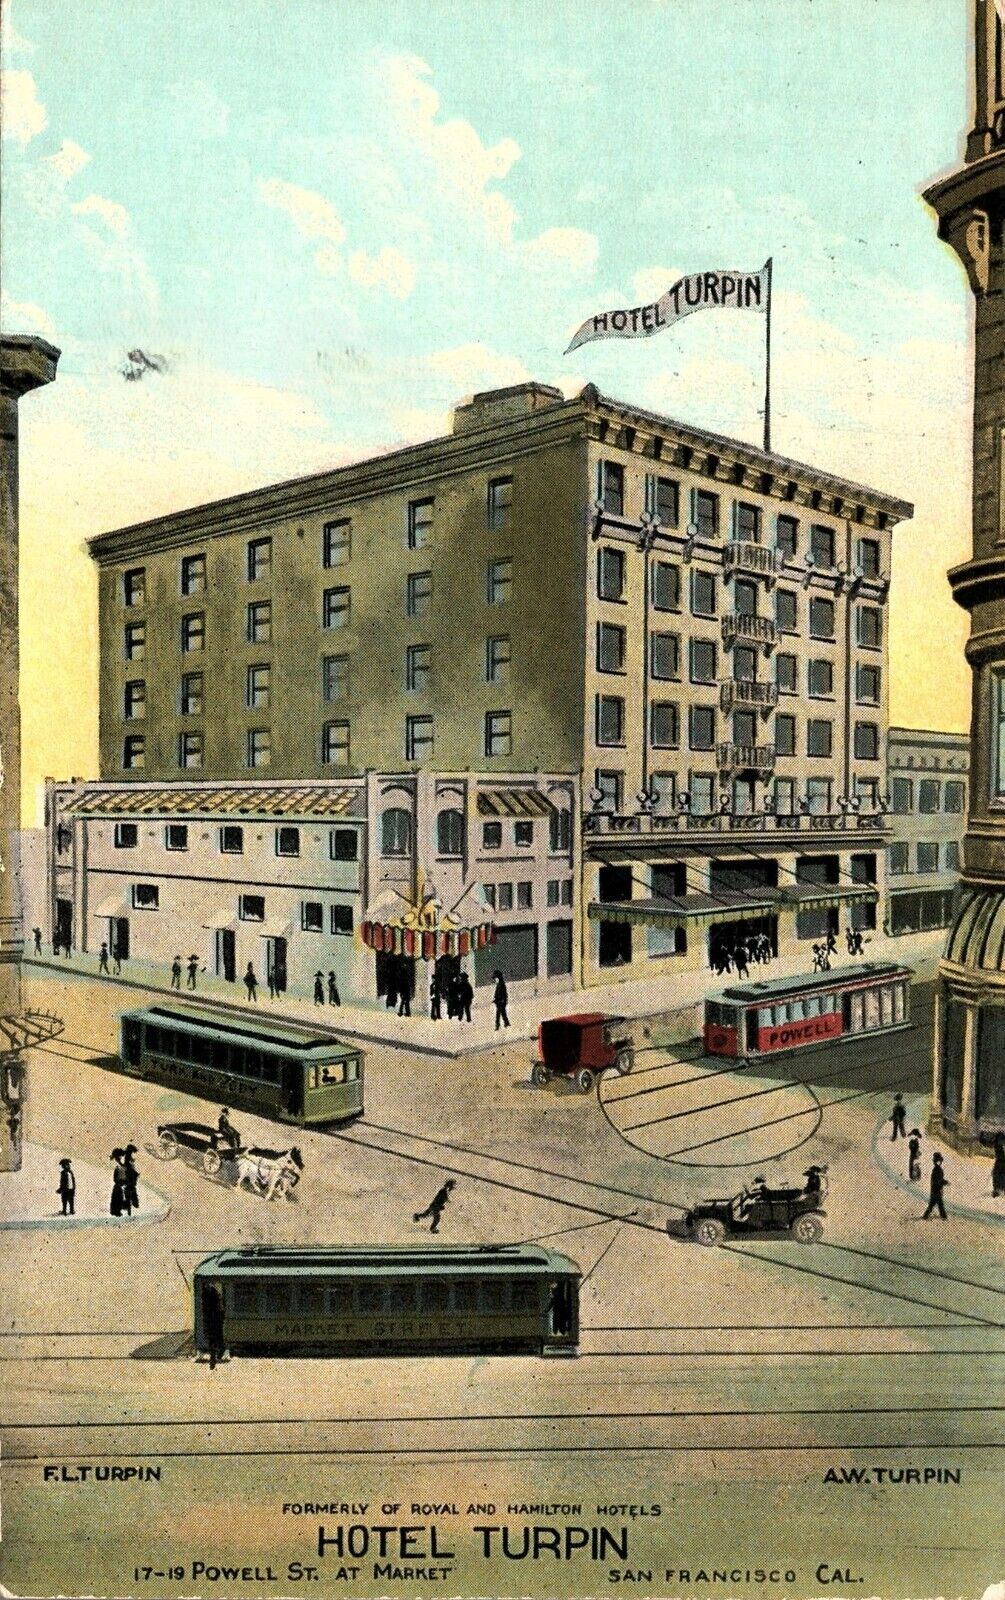 SAN FRANCISCO POSTCARD - HOTEL TURPIN 17-19 POWELL ST AT MARKET - TROLLEYS 1912